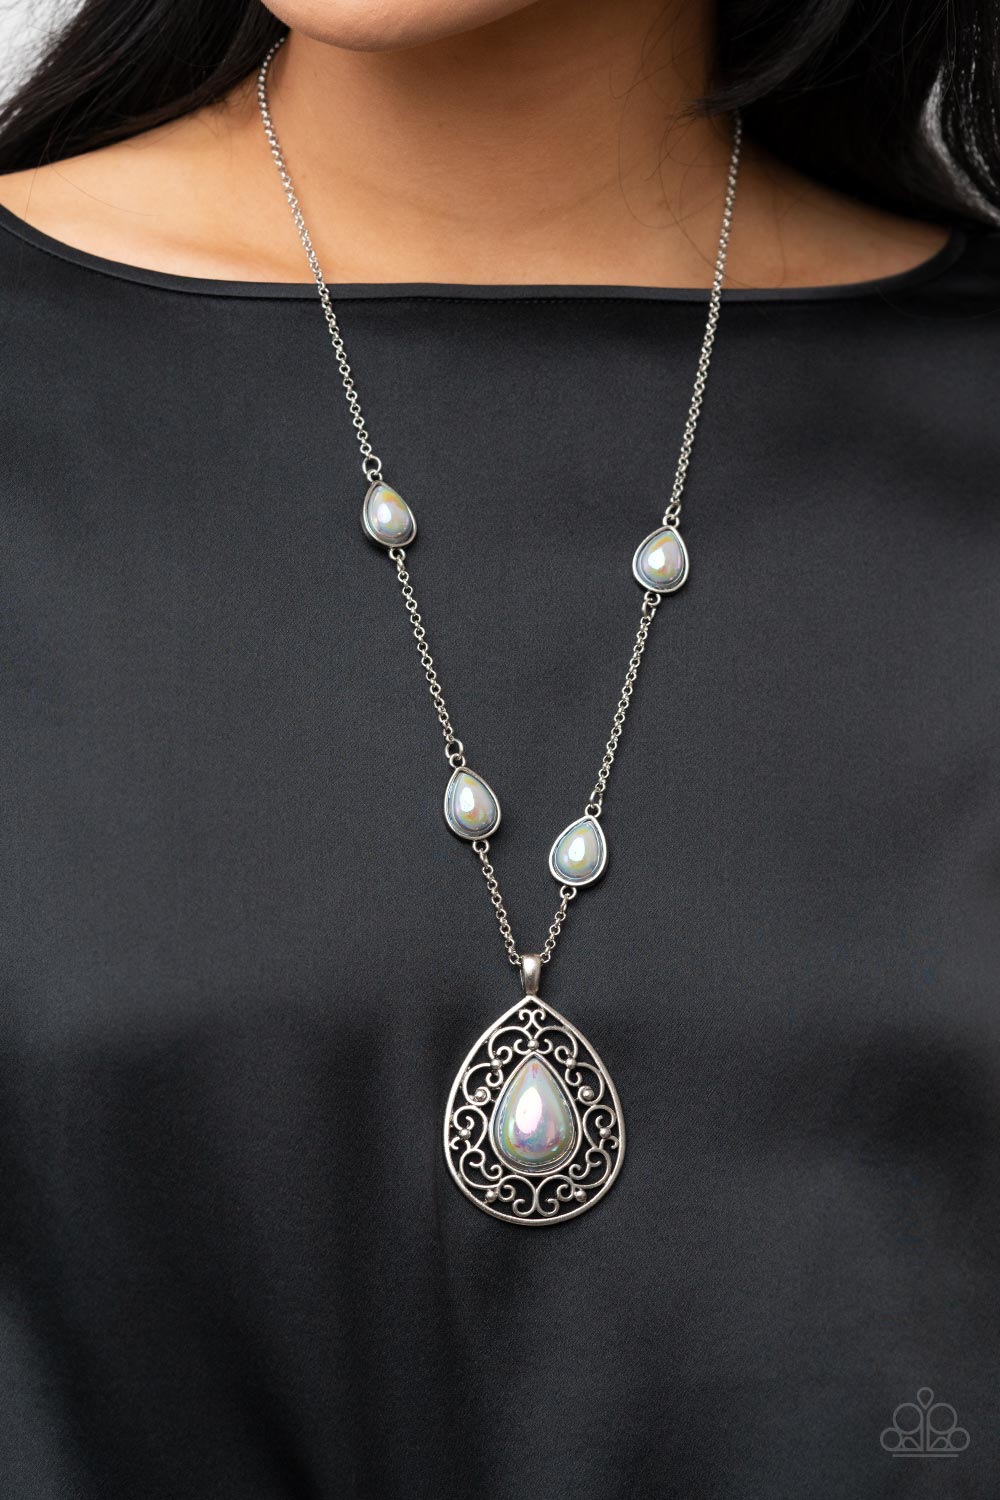 Mystical Majesty - Pink Gems and Silver Necklace - Paparazzi Jewelry